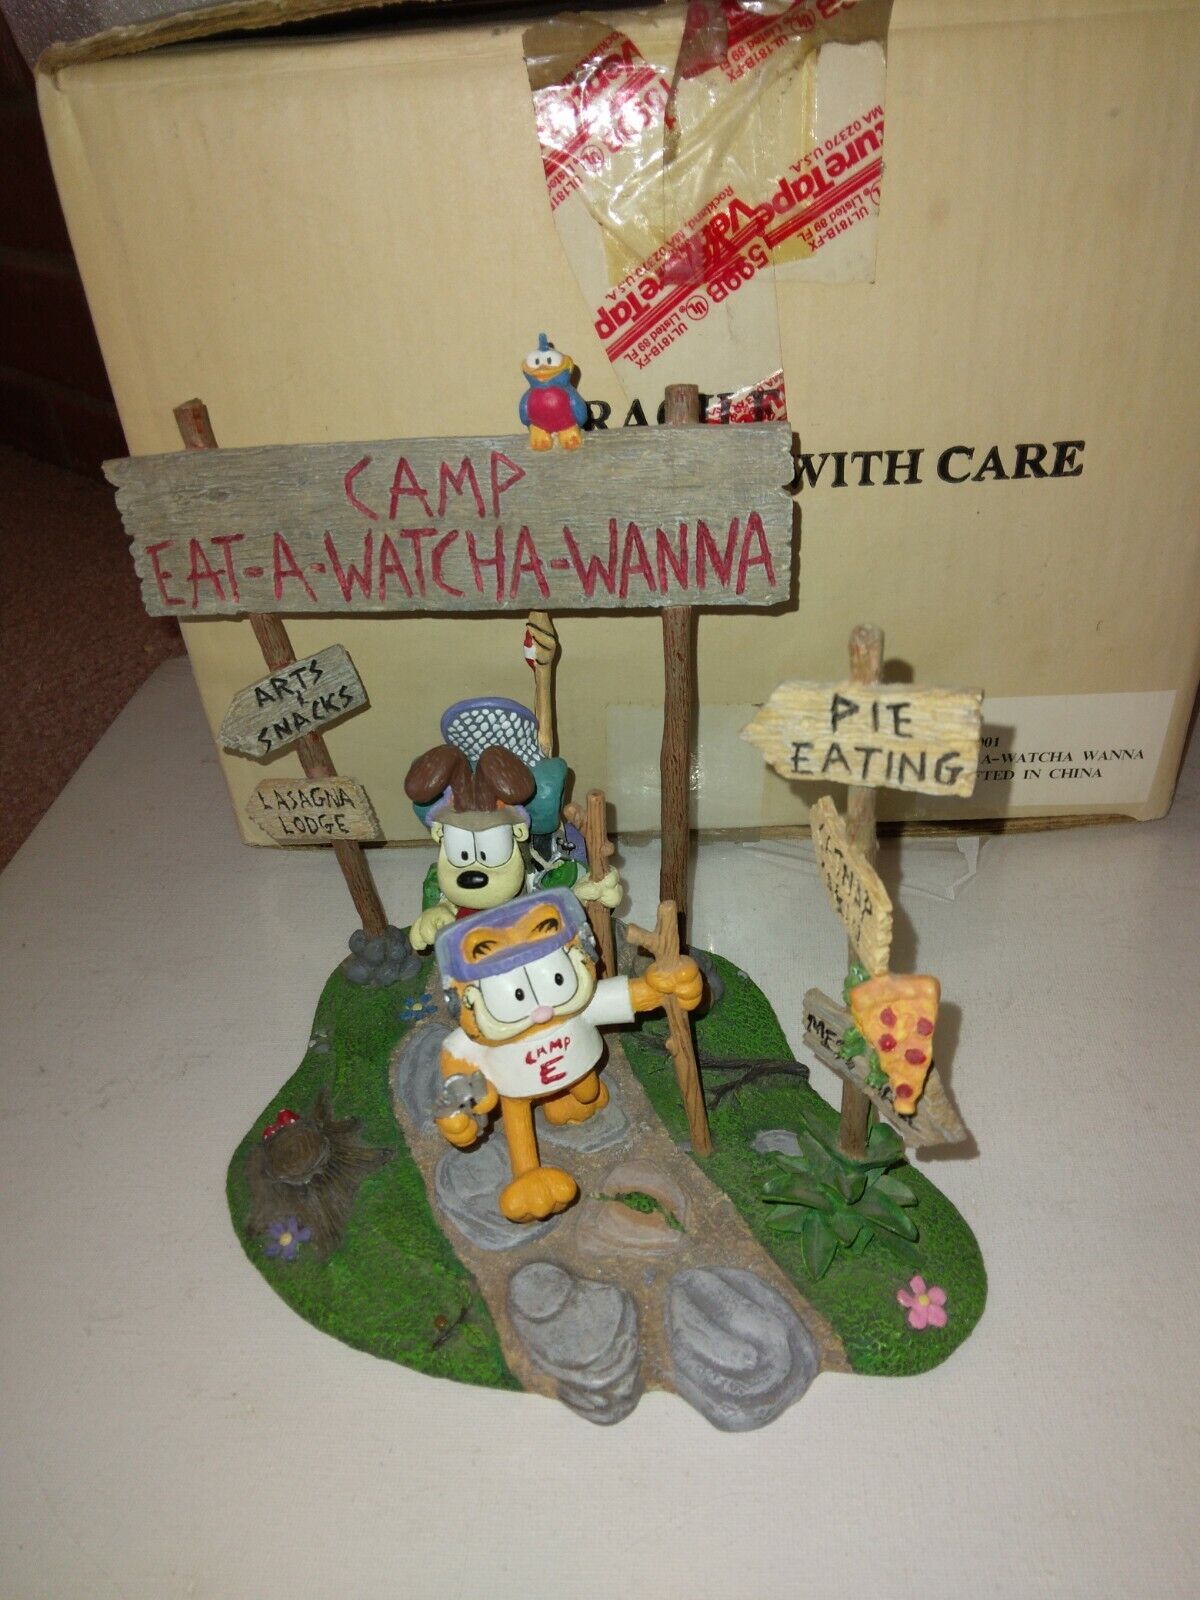 Garfield Camp Eat-A-Watcha-Wanna by Danbury Mint Figure with Box 